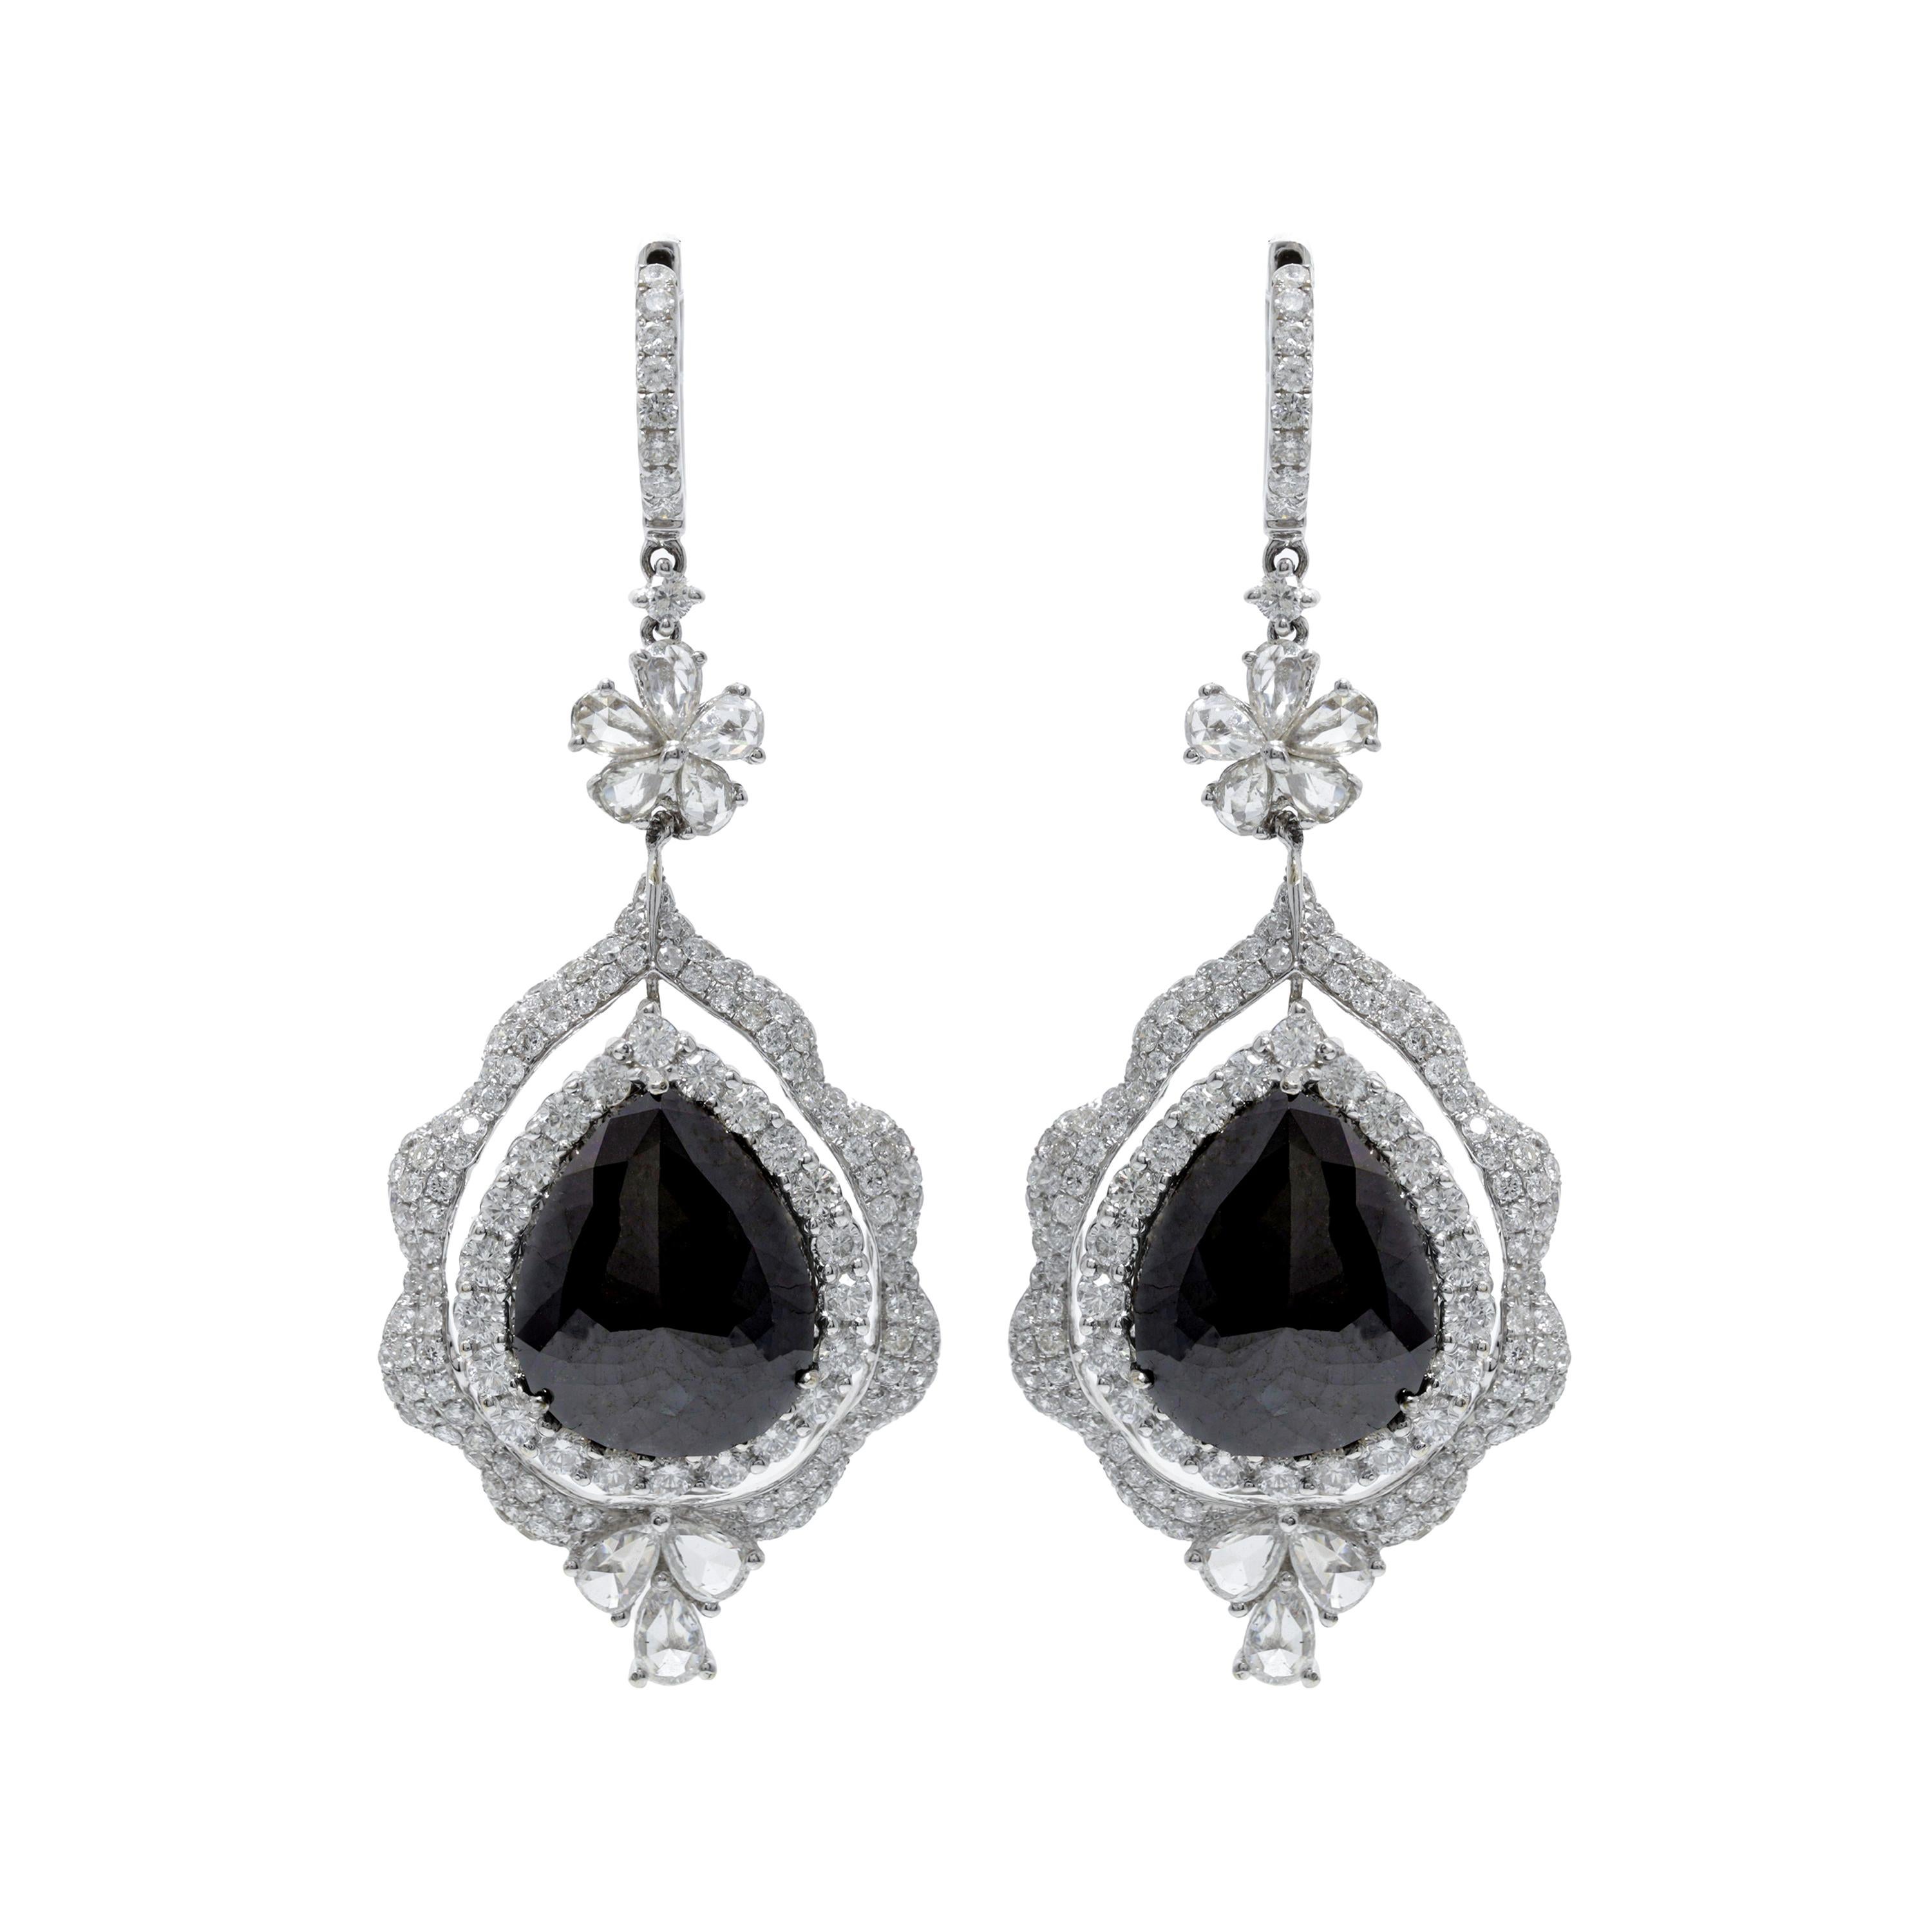 Le2885-118k White Gold & Pear Shape Black Diamond Earring For Sale